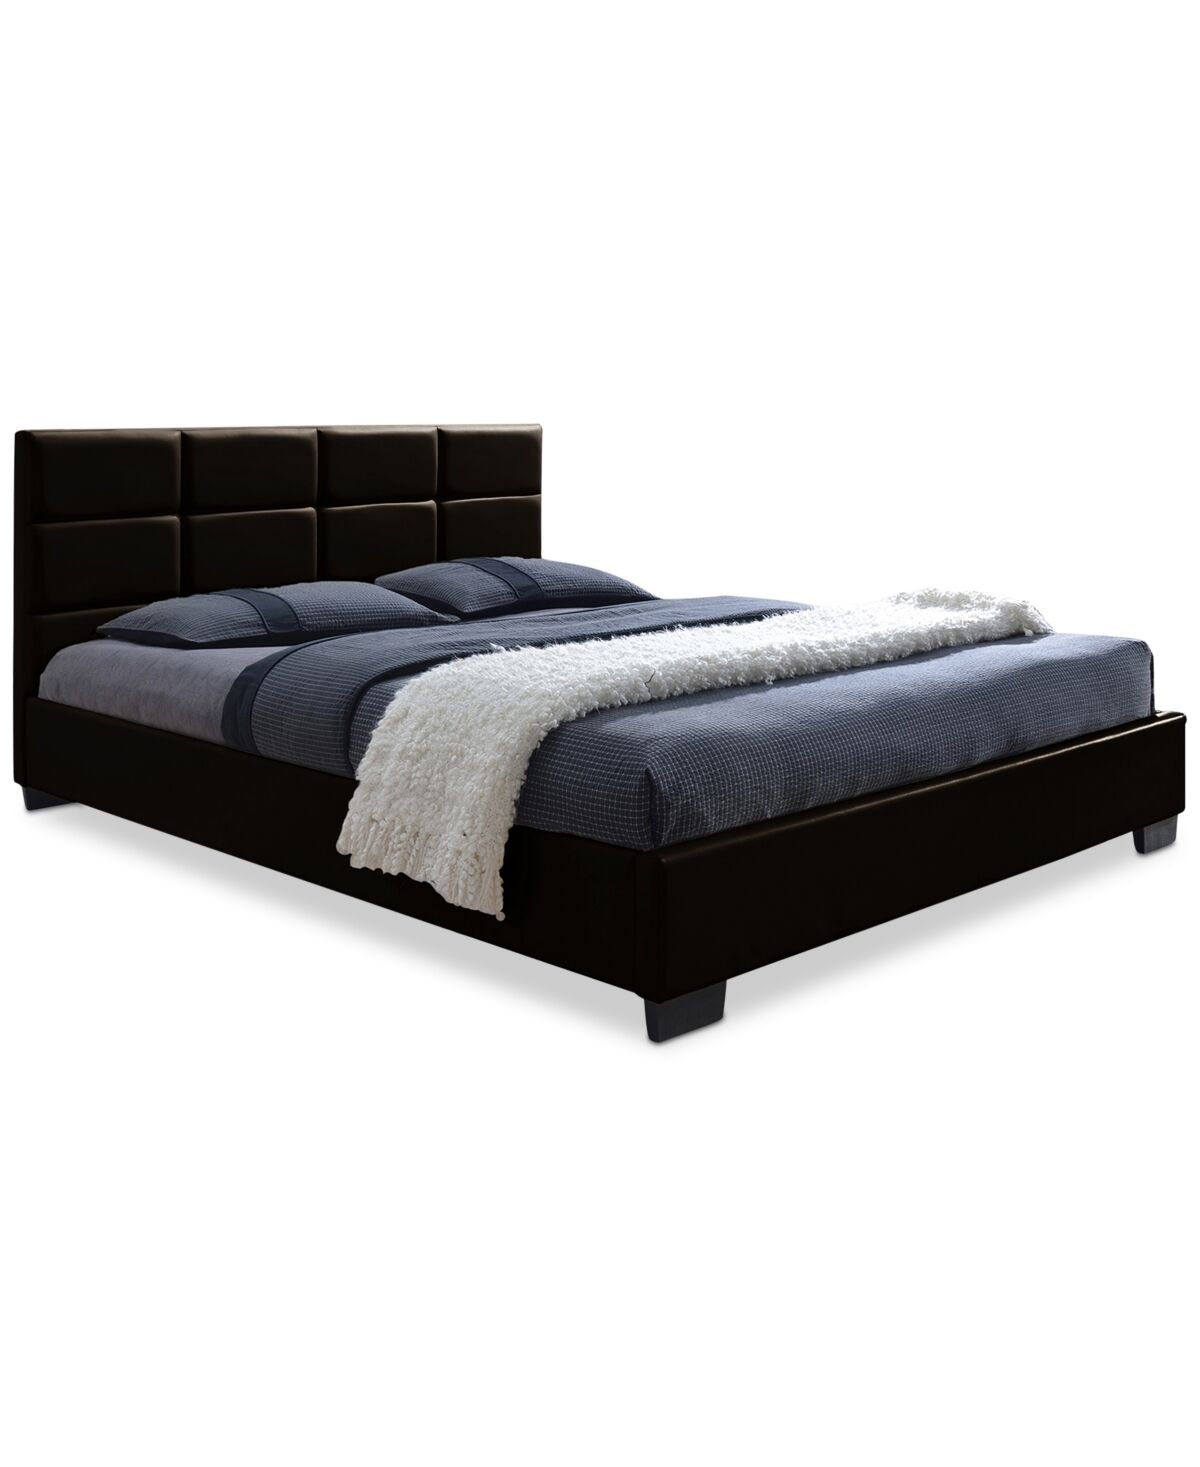 Furniture Yinette Queen Bed - Dark Brown